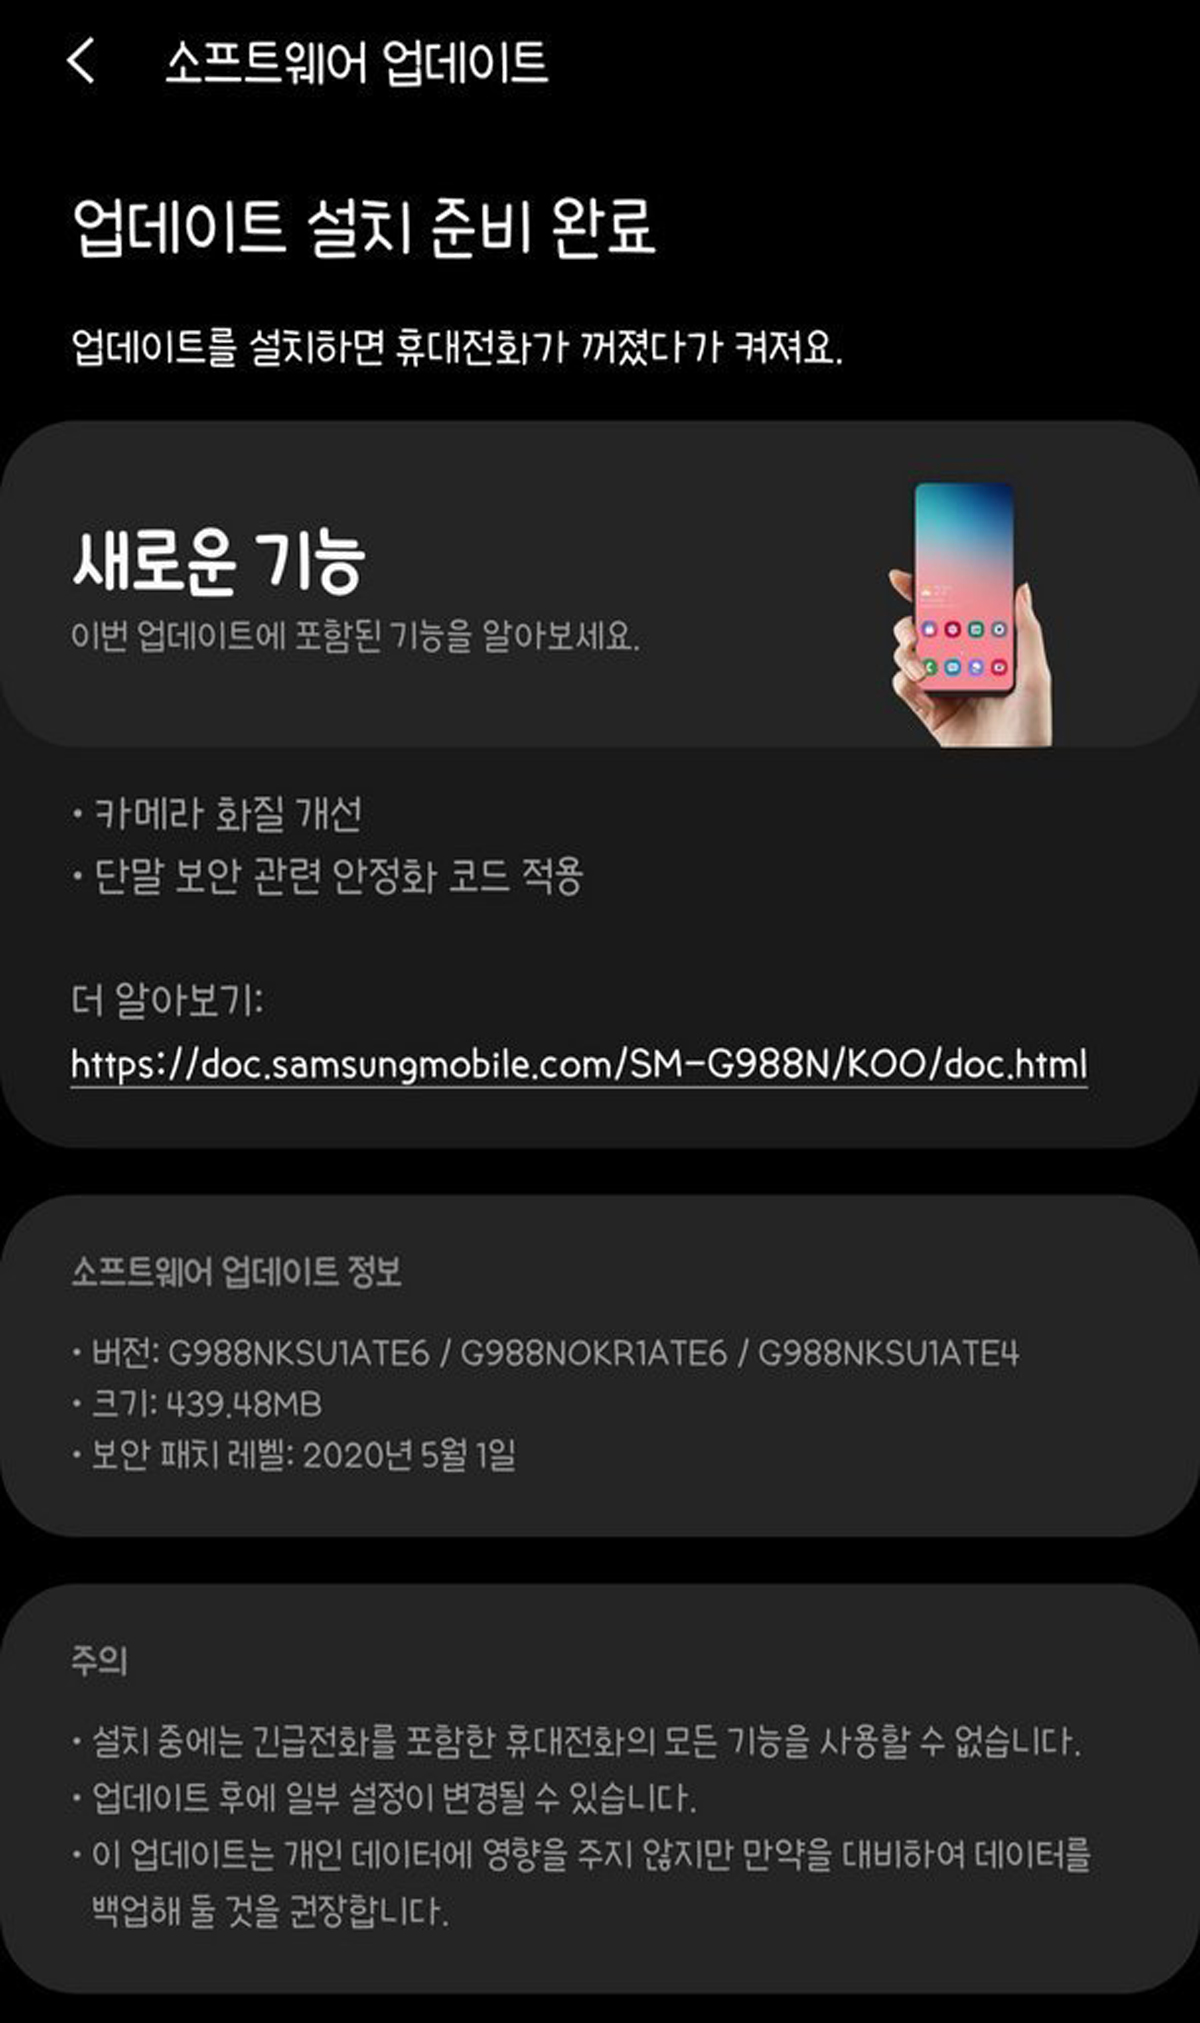 Samsung Galaxy S20 Series Upcoming Update 1